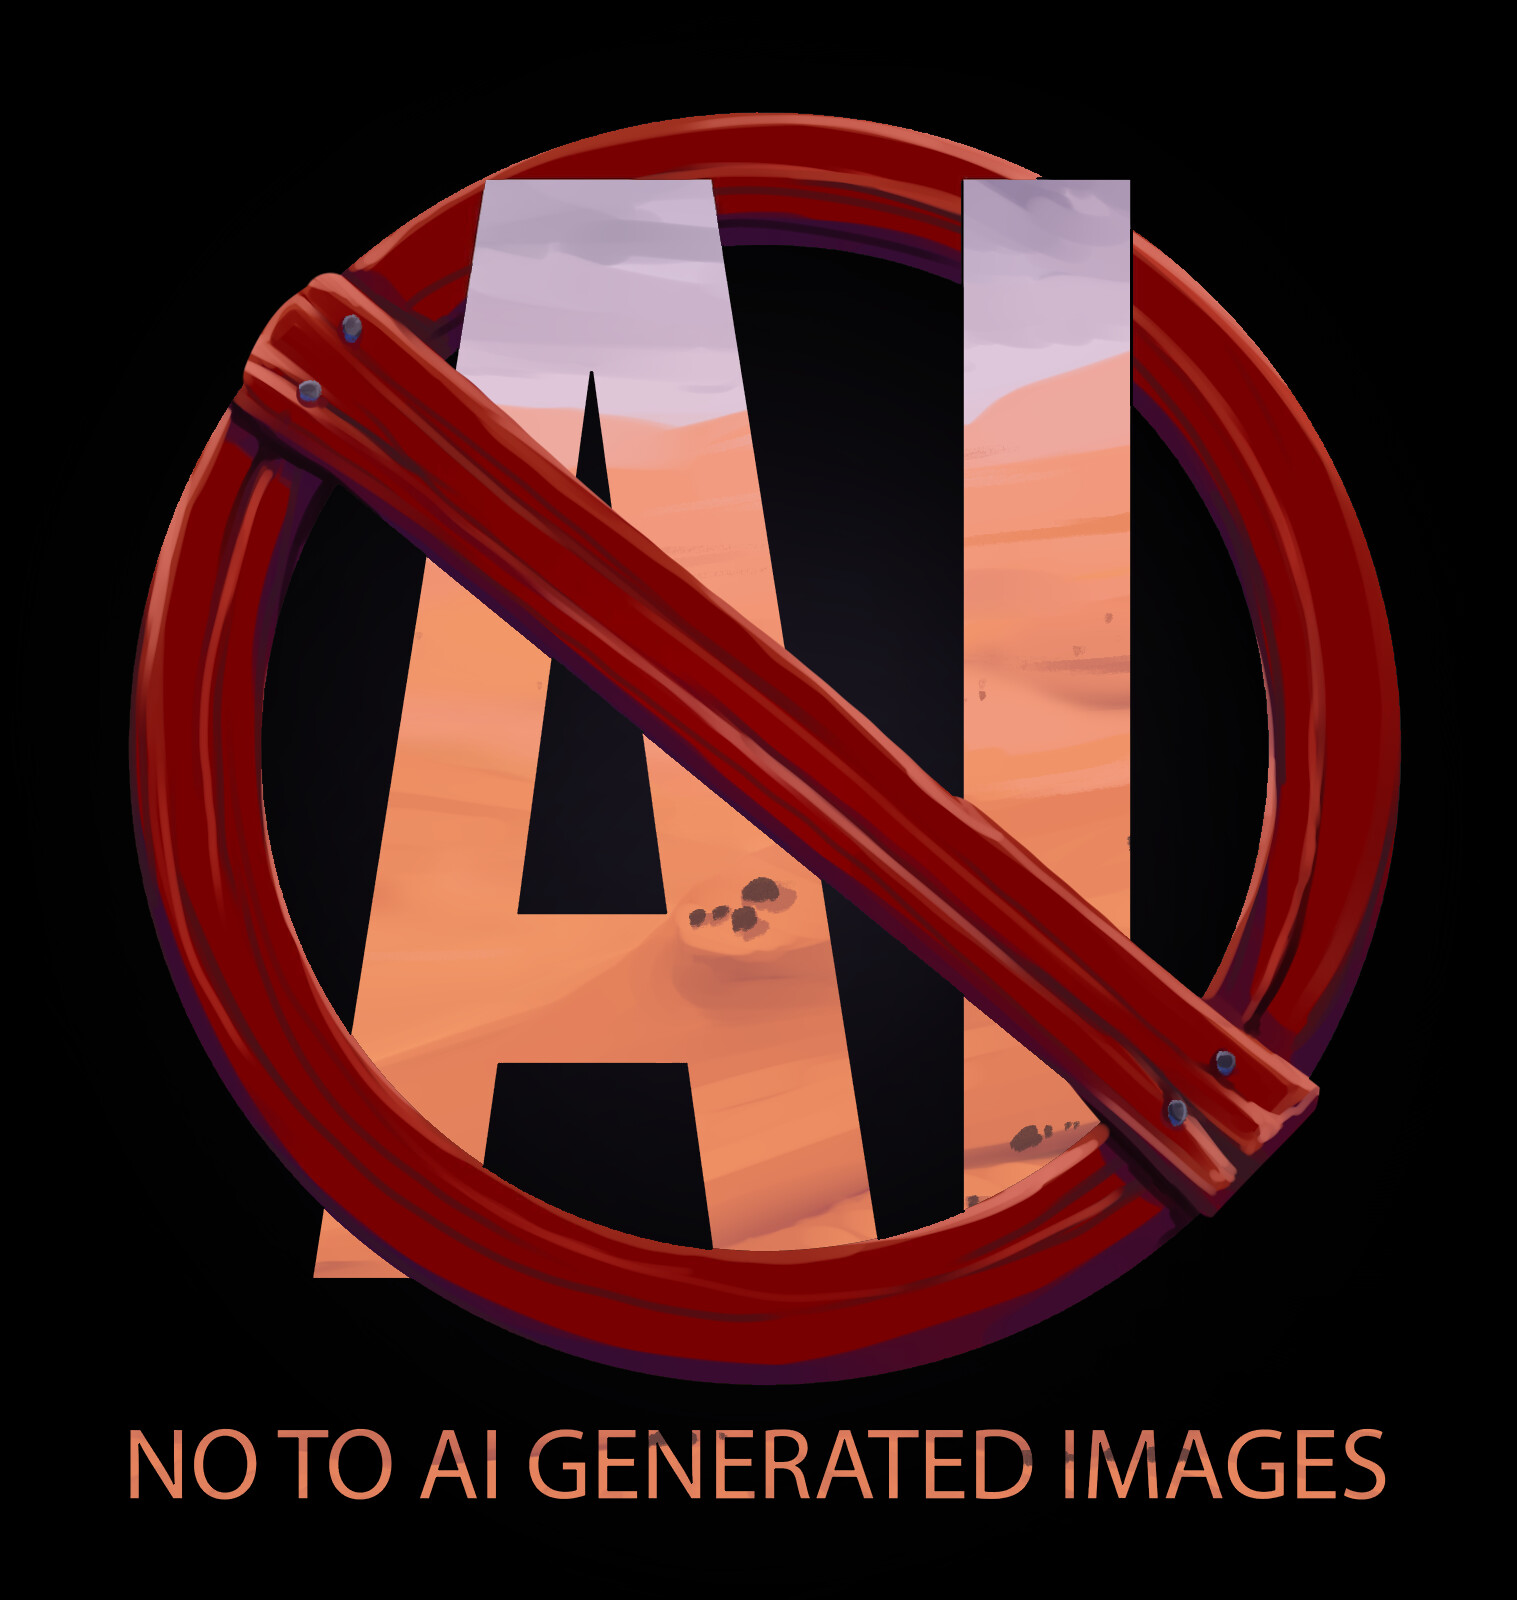 Ai image generator steam фото 85